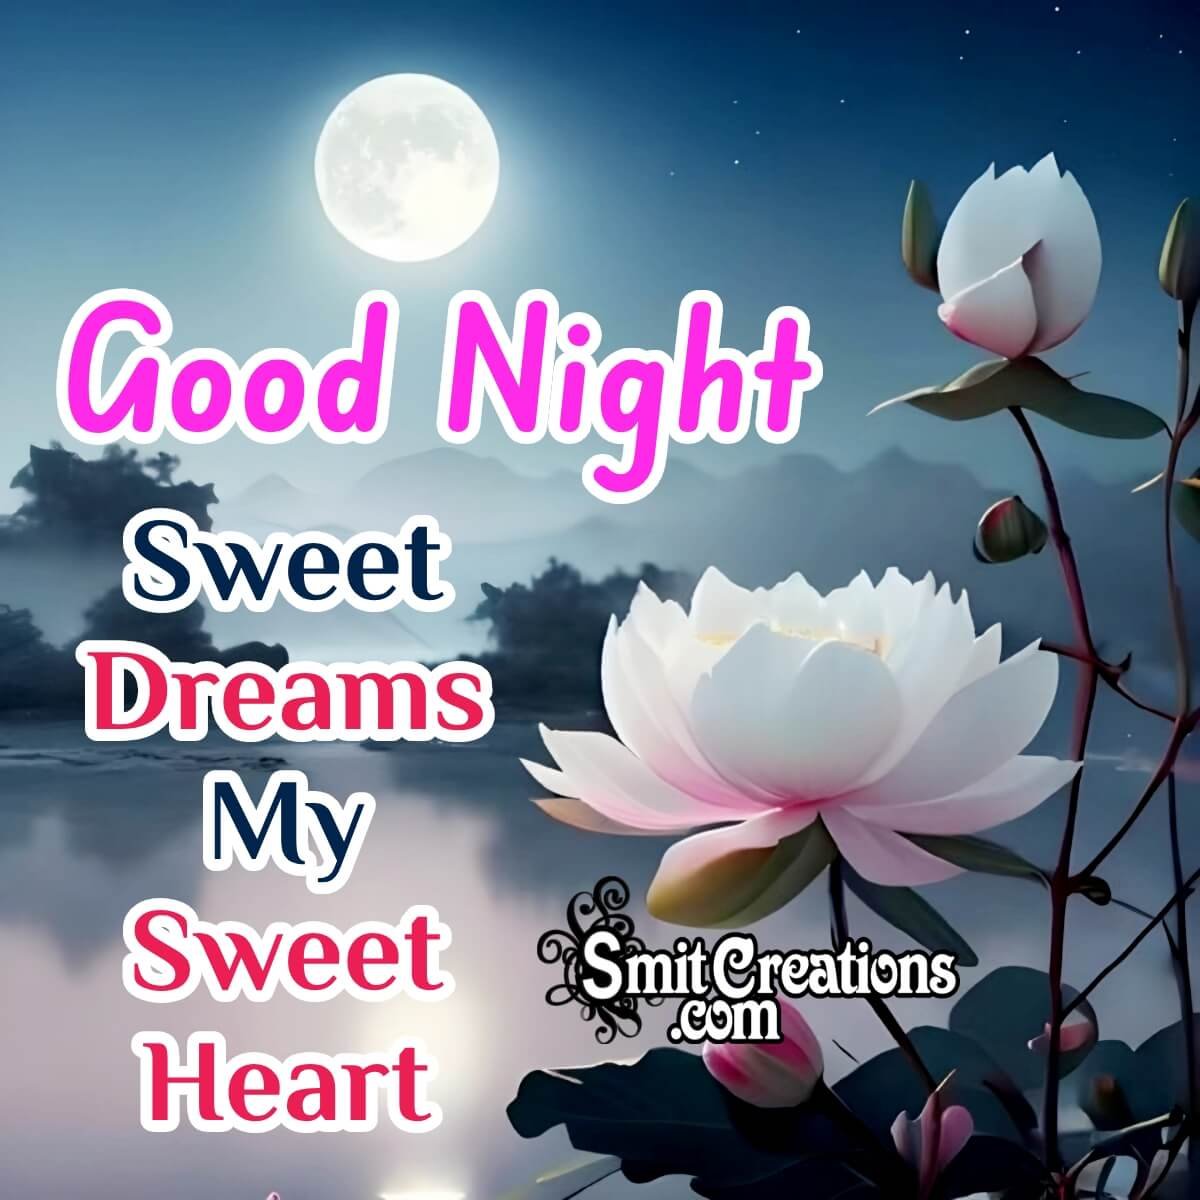 Good Night Sweet Dreams My Sweet Heart